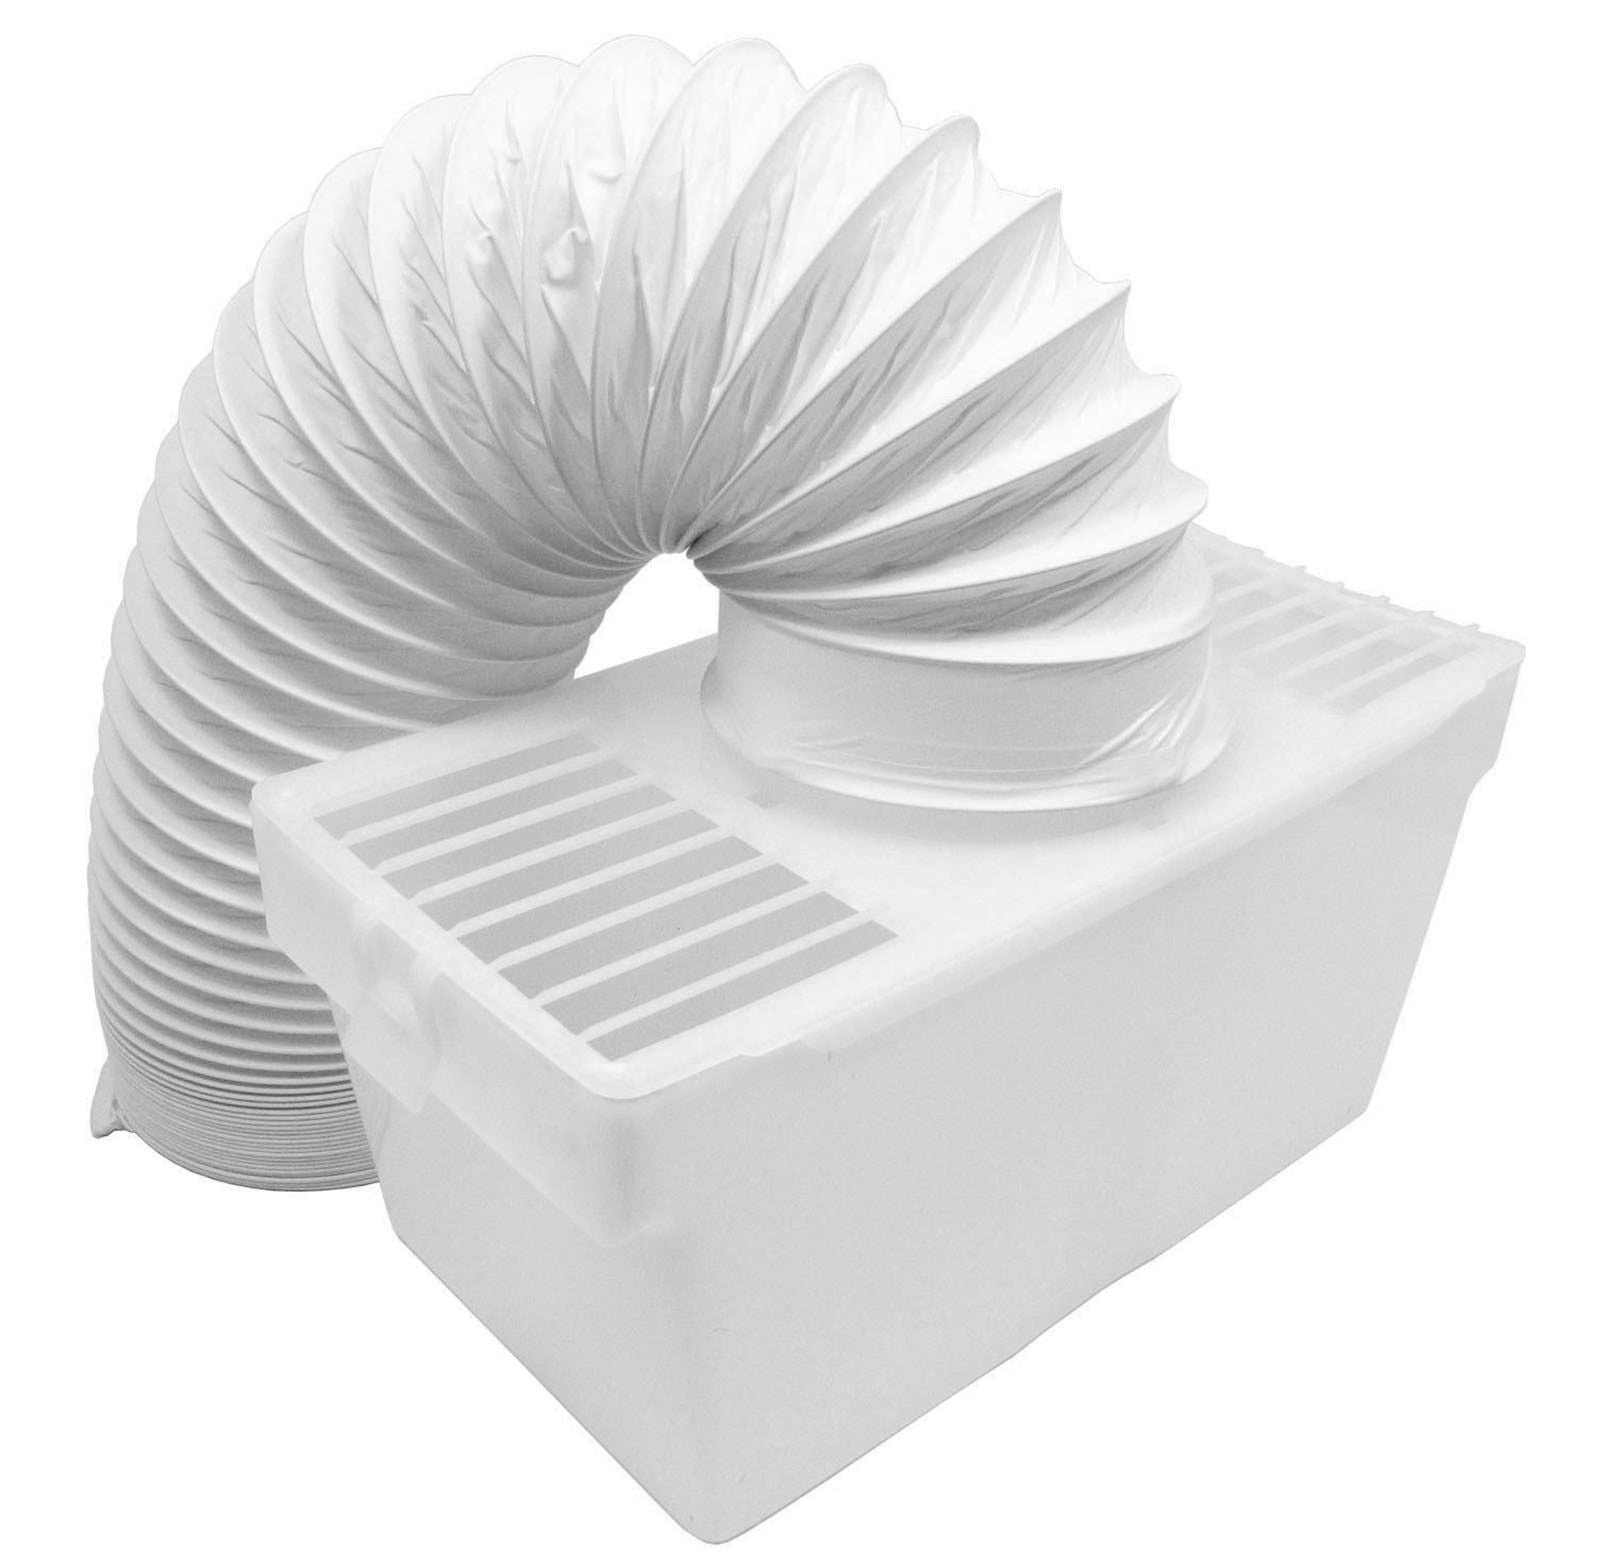 Condenser Vent Box & Hose Kit for White Knight Vented Tumble Dryers (1.5m / 4" Diameter)